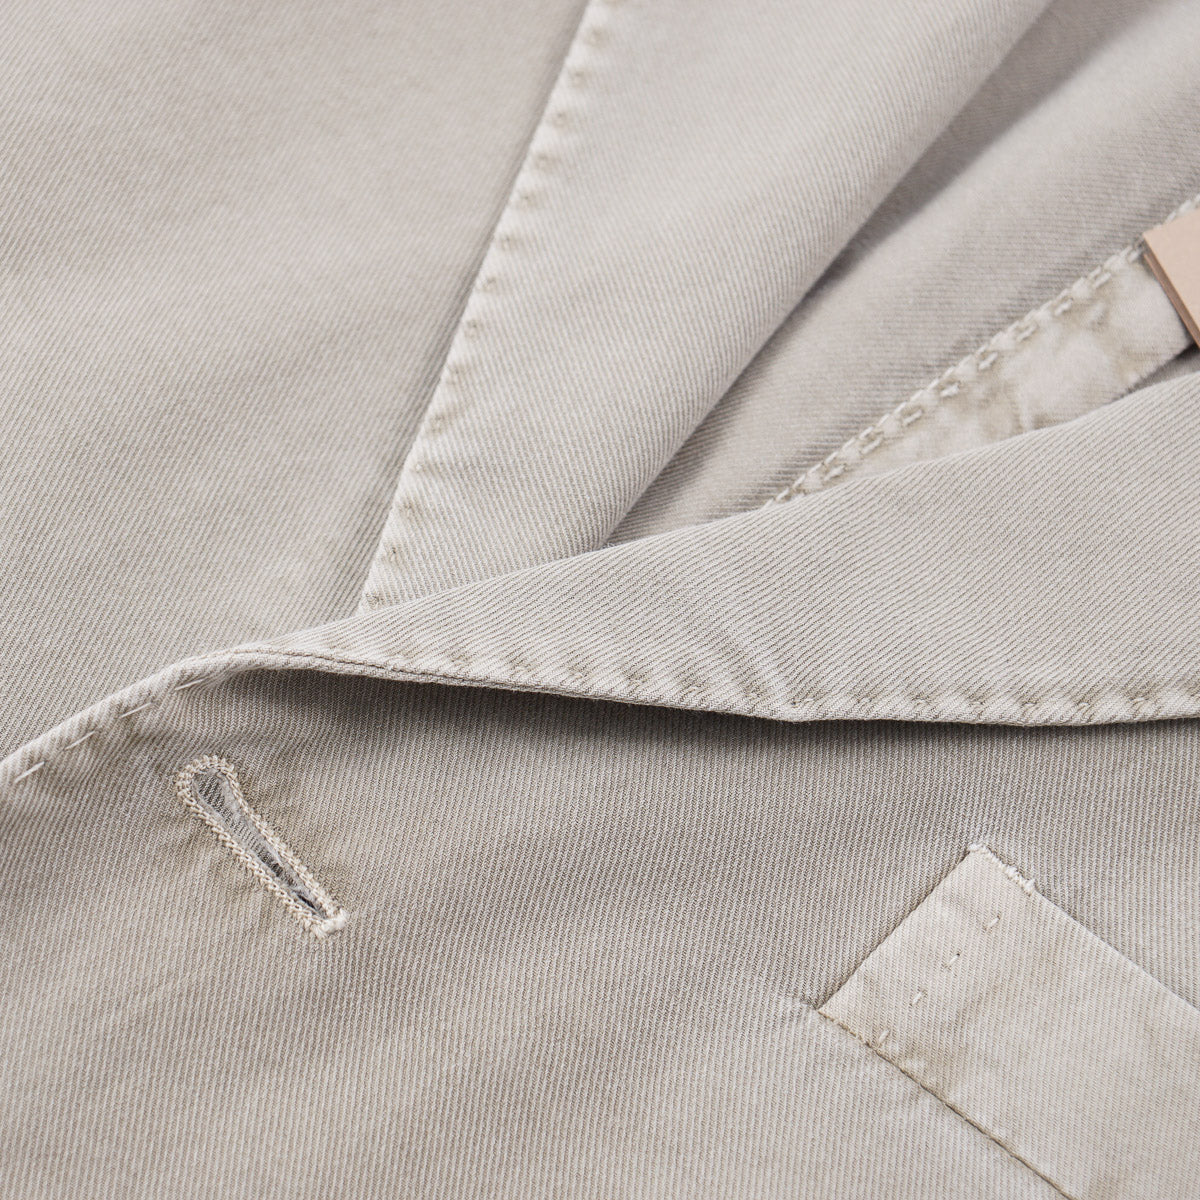 Boglioli Lightweight Cotton 'K Jacket' Sport Coat - Top Shelf Apparel